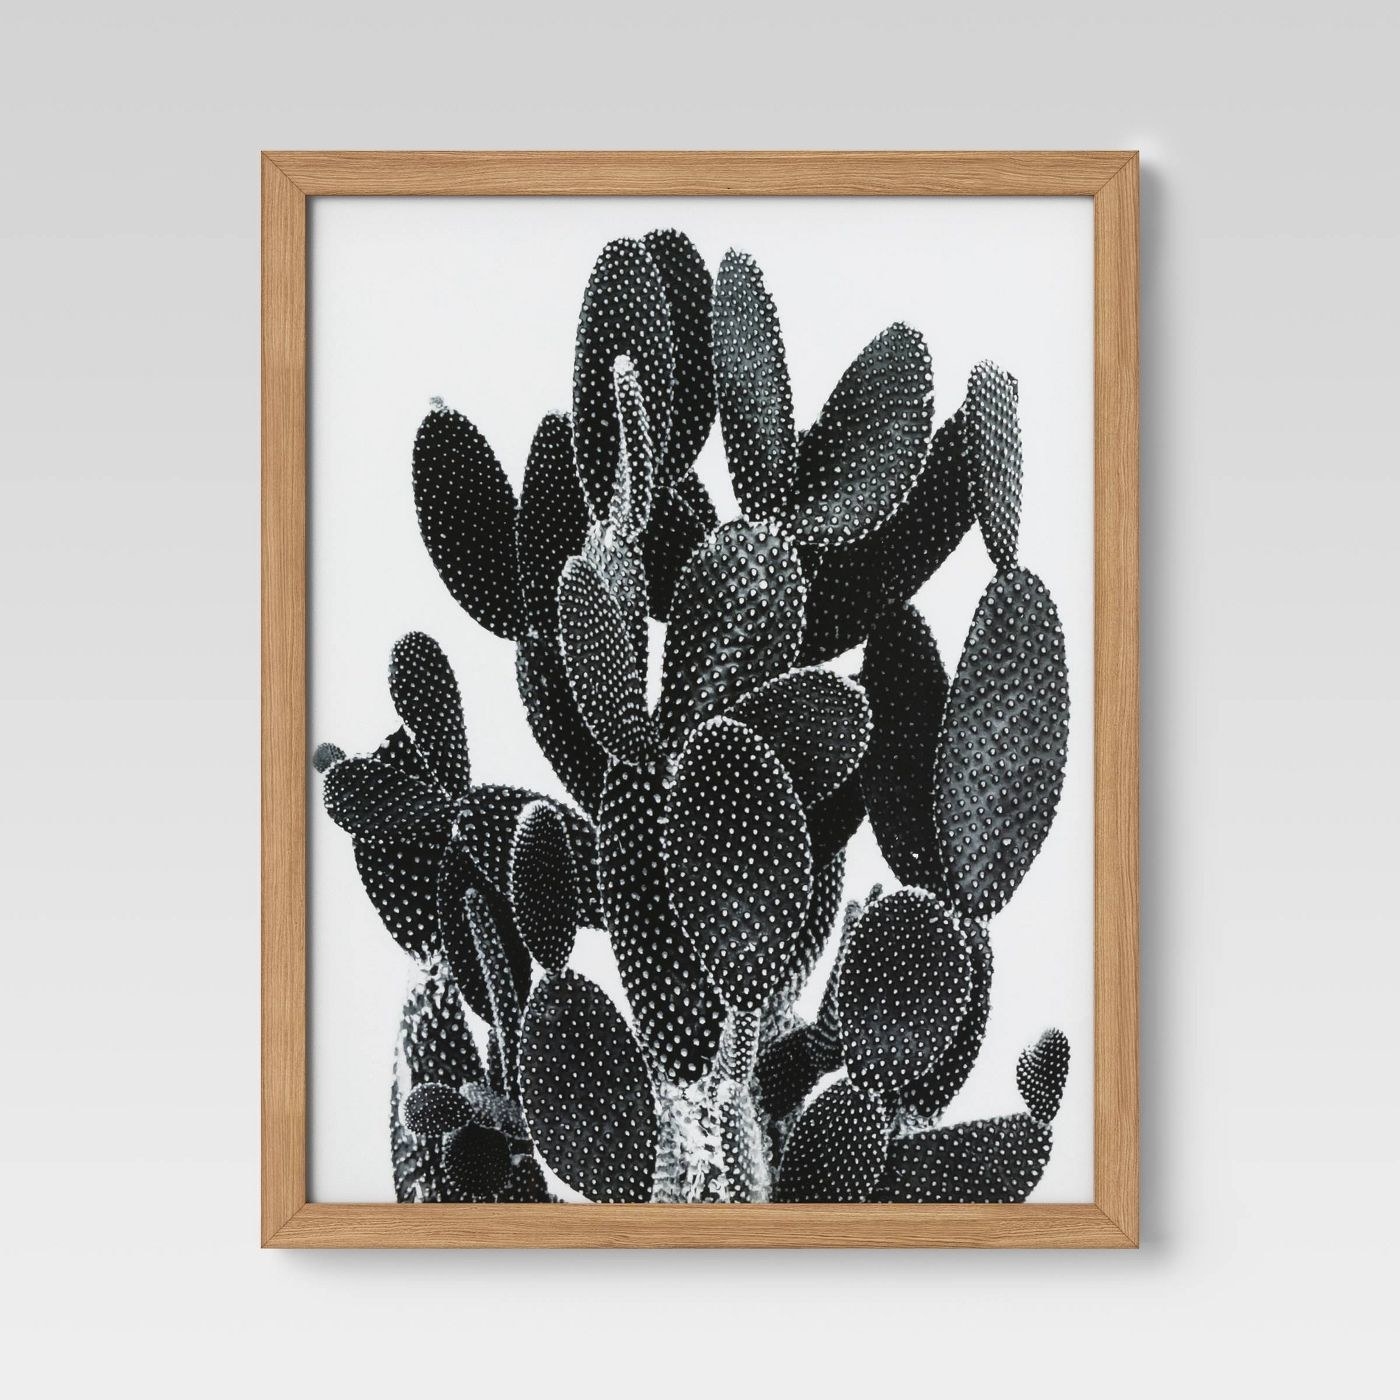 The striking framed cactus print